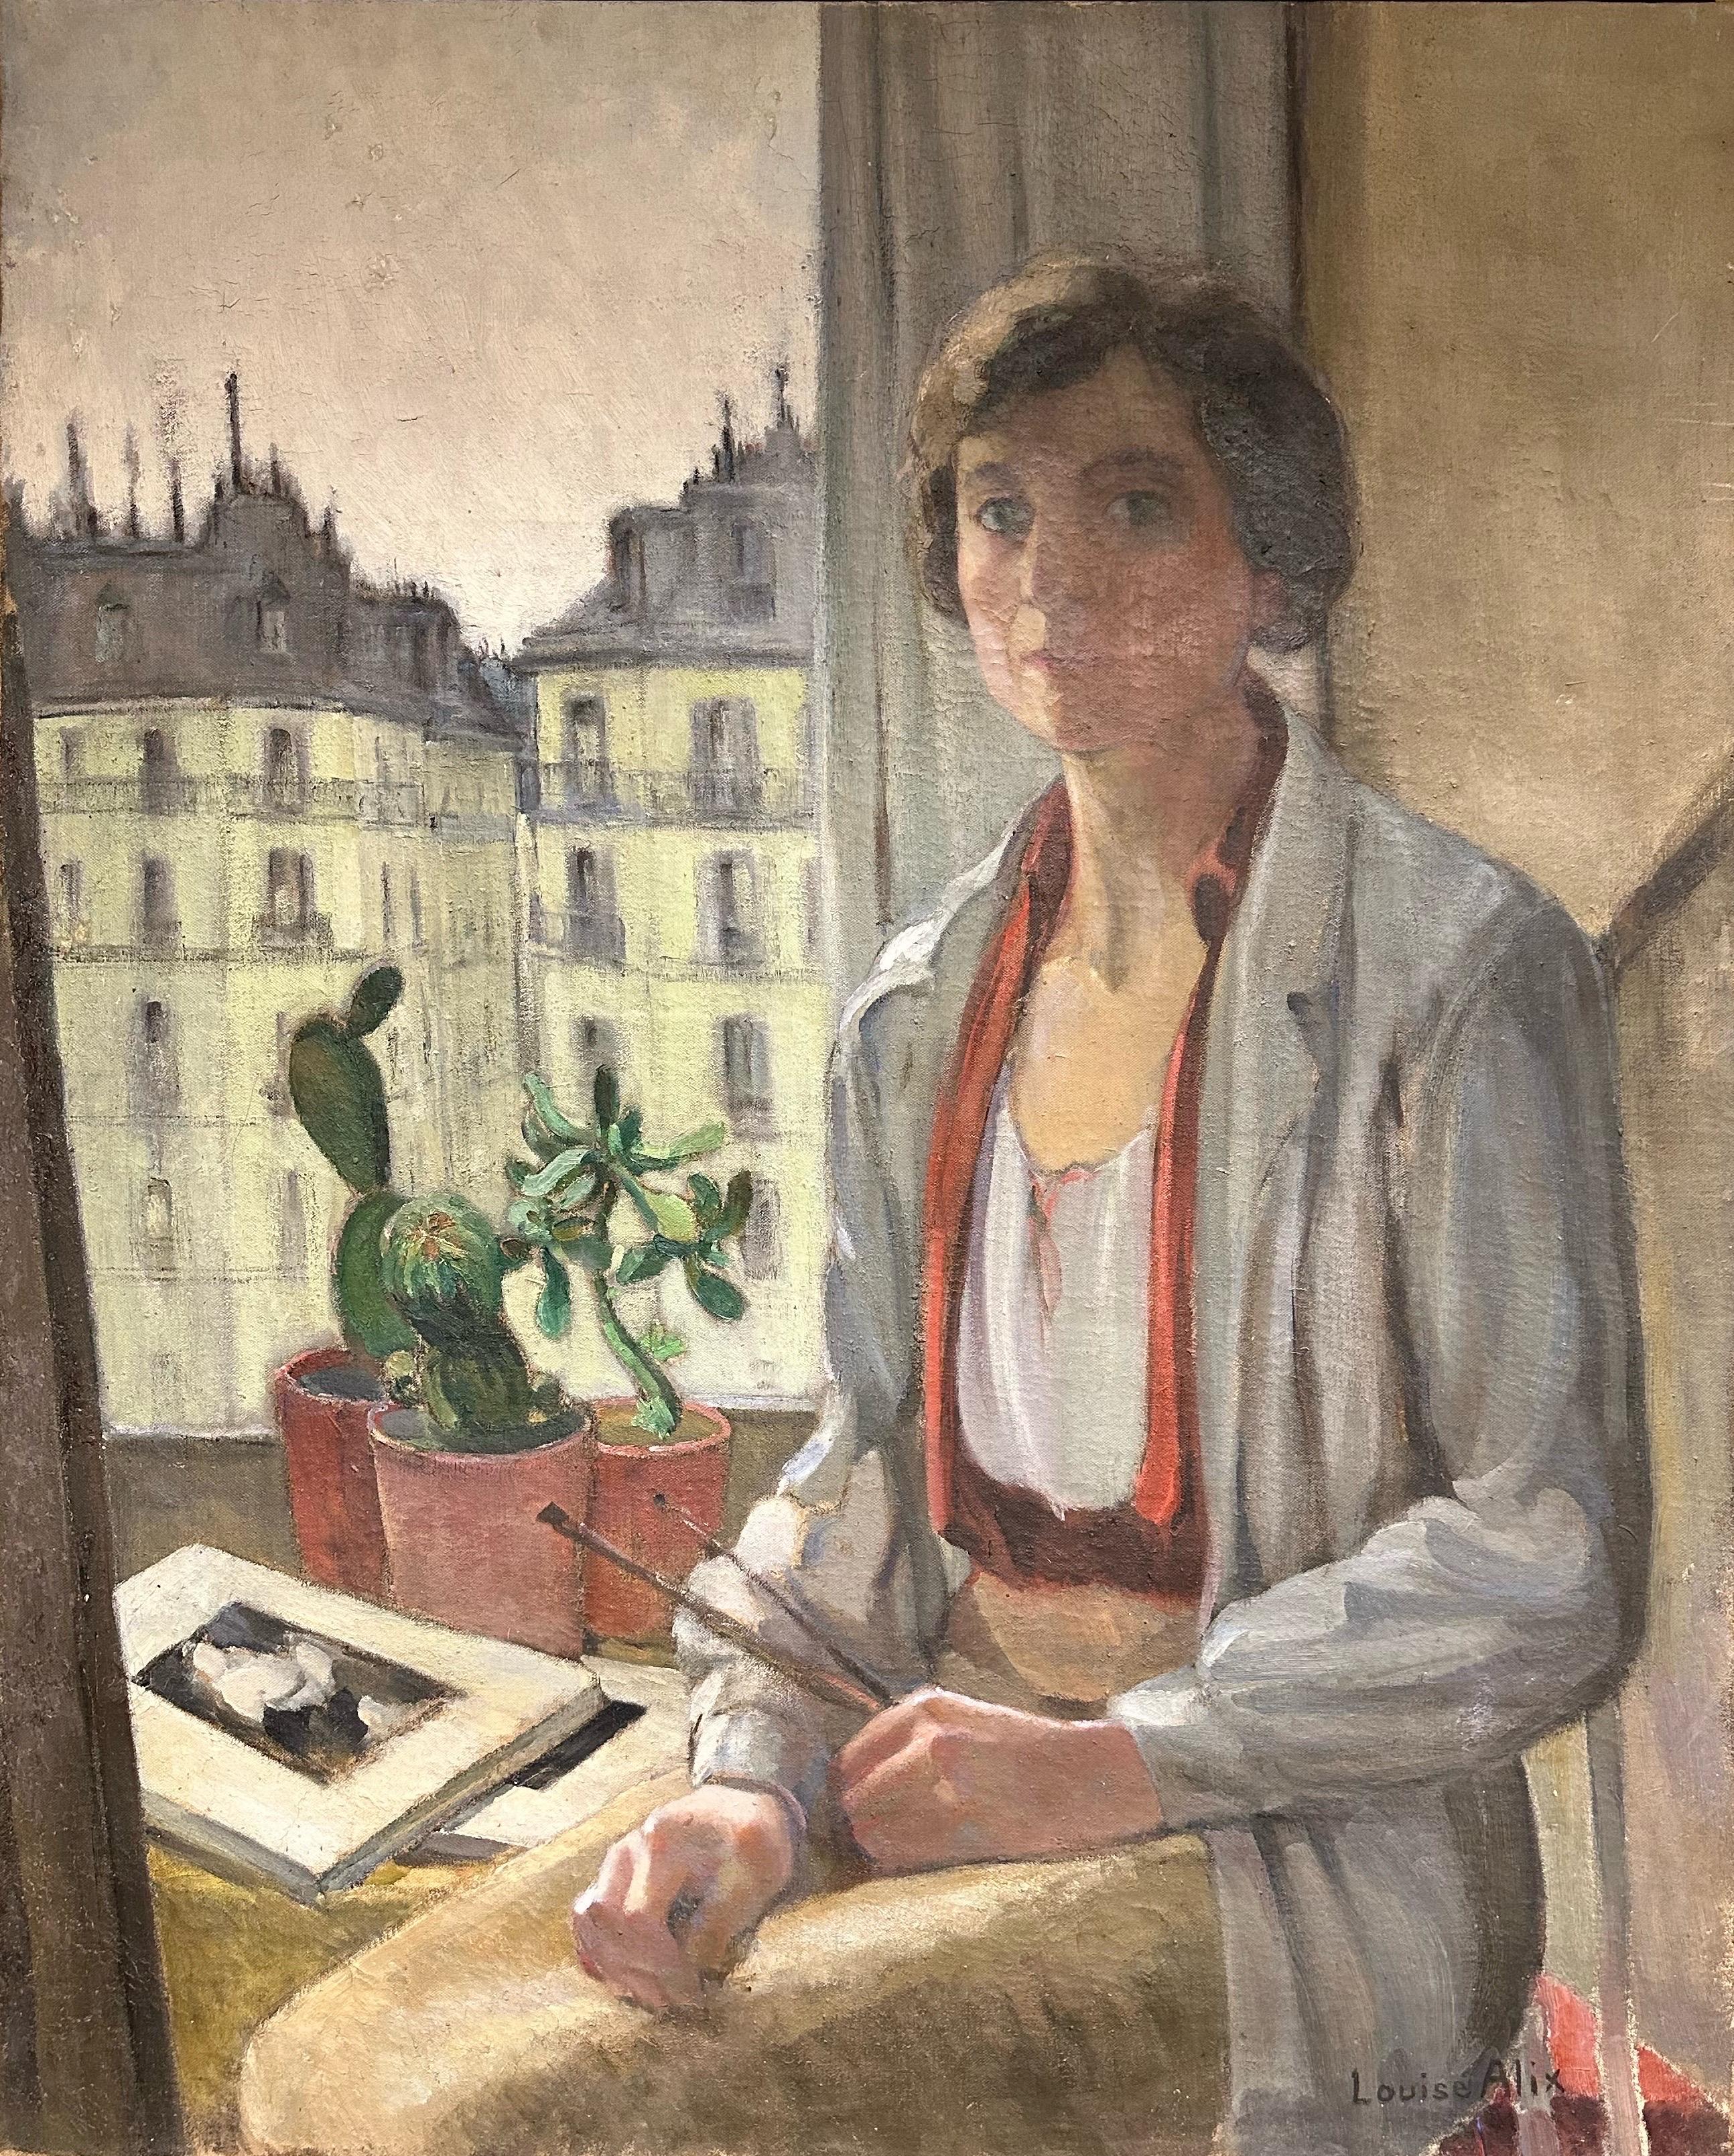 Louise Alix Portrait Painting - 1930's French Oil Painting Self Portrait of Artist Paris Rooftops Studio View